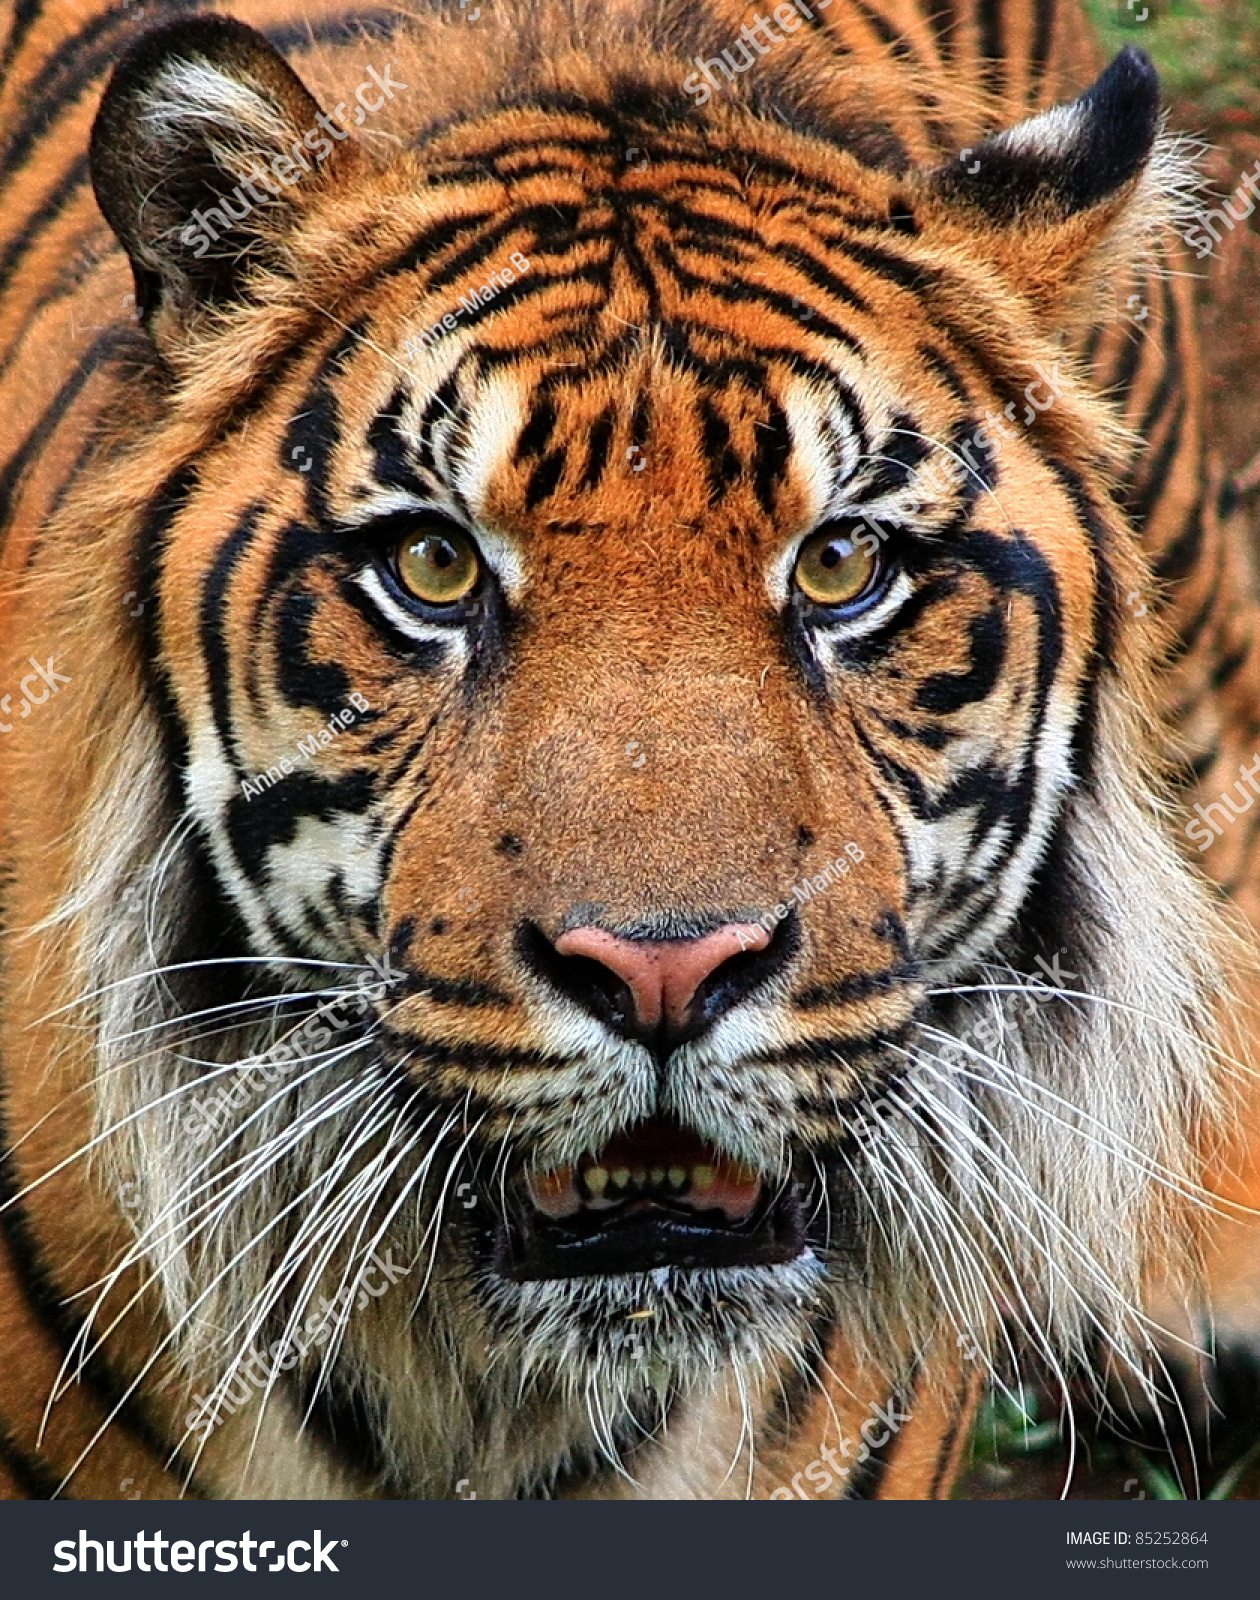 Sumatran Tiger Stock Photo 85252864 : Shutterstock